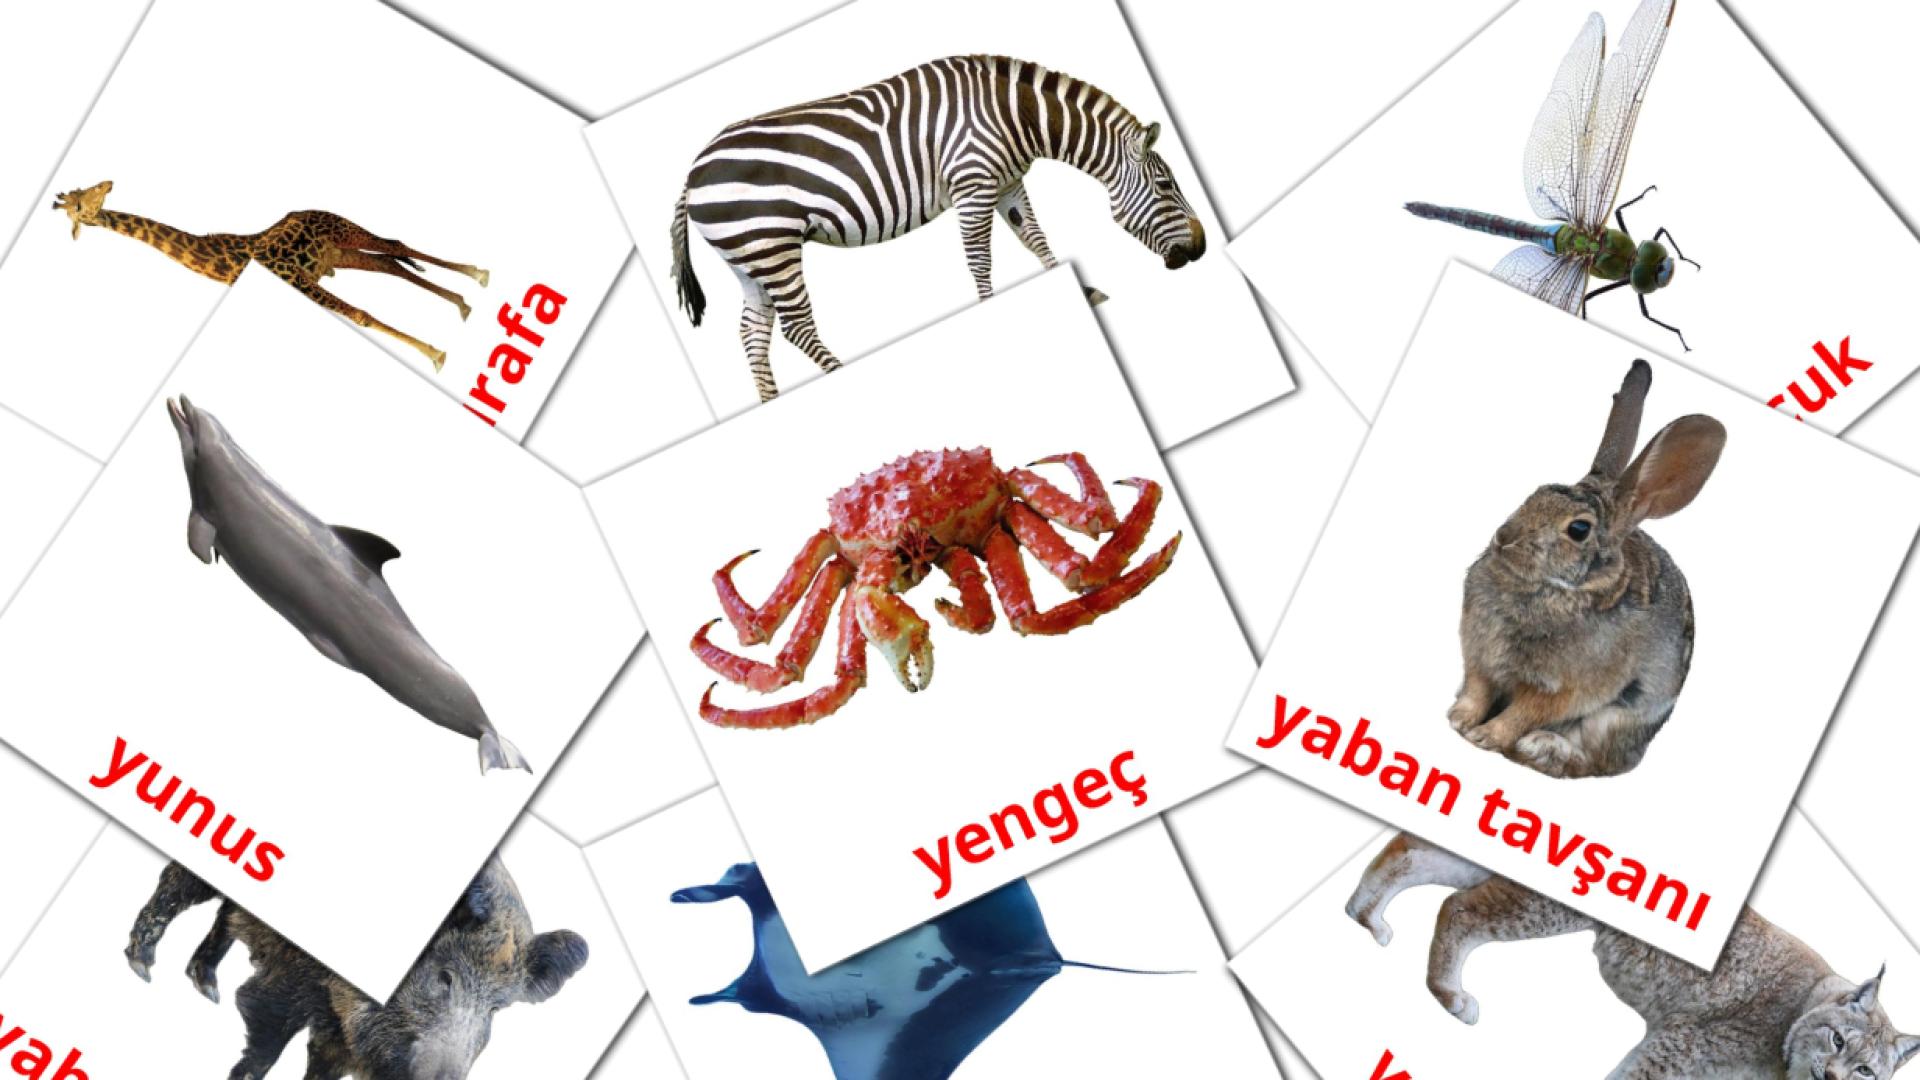 Türkisch Hayvanlare Vokabelkarteikarten